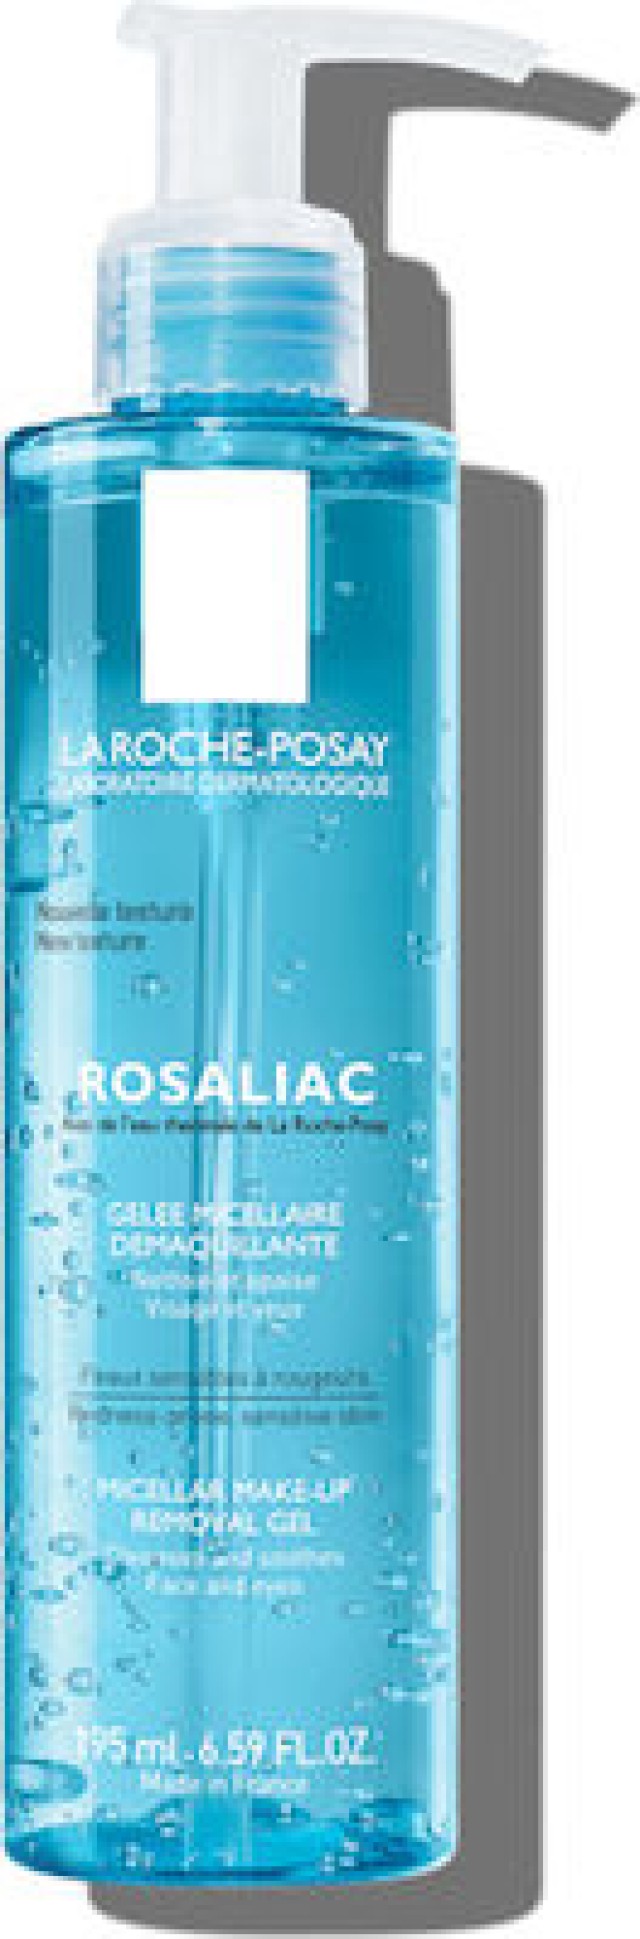 La Roche Posay Rosaliac Micellare Gel Ντεμακιγιάζ Προσώπου για Ευαίσθητο Δέρμα 195ml